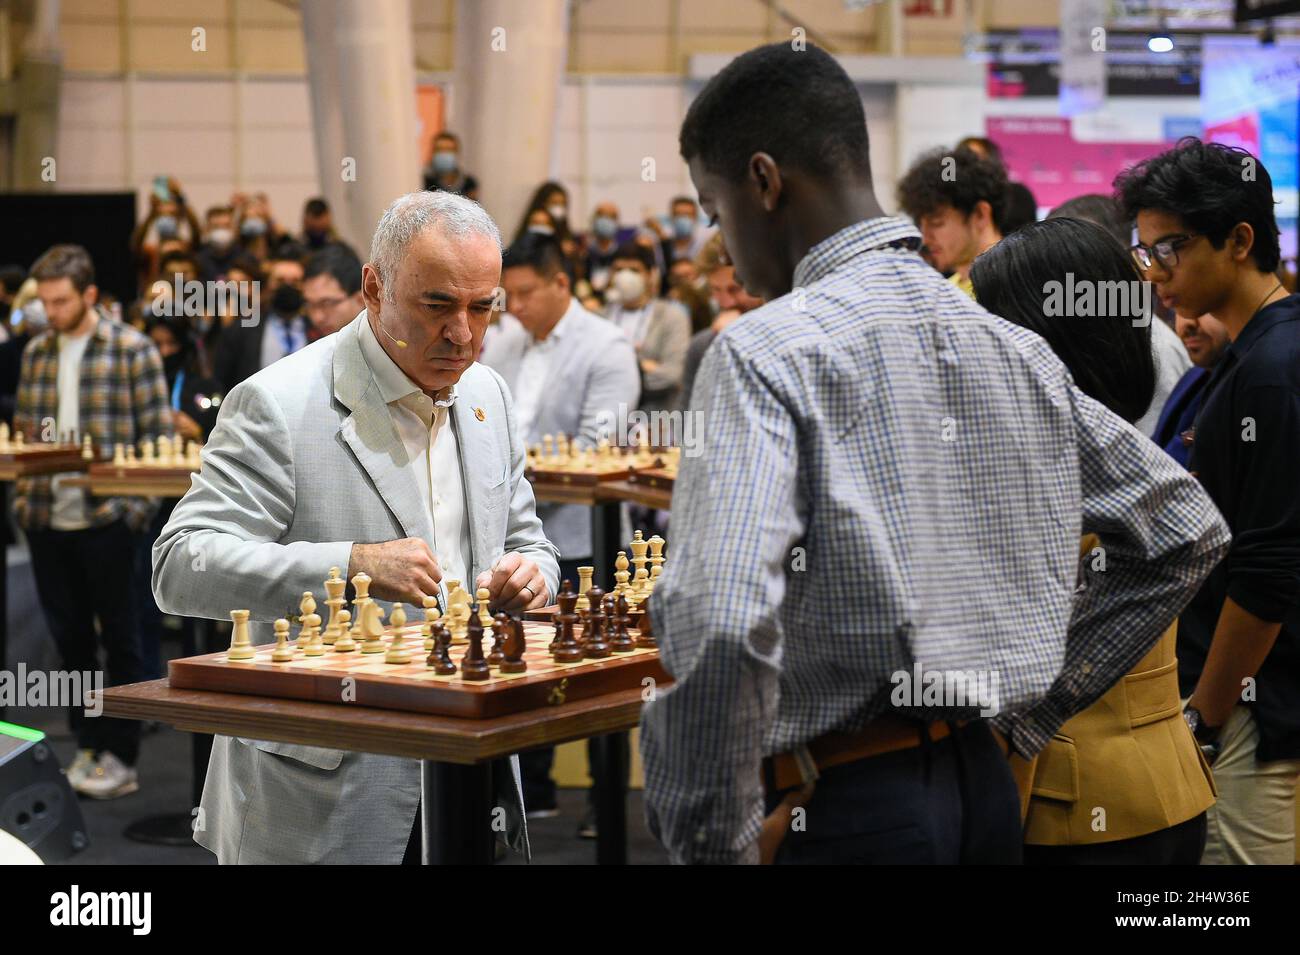 The chess games of Garry Kasparov